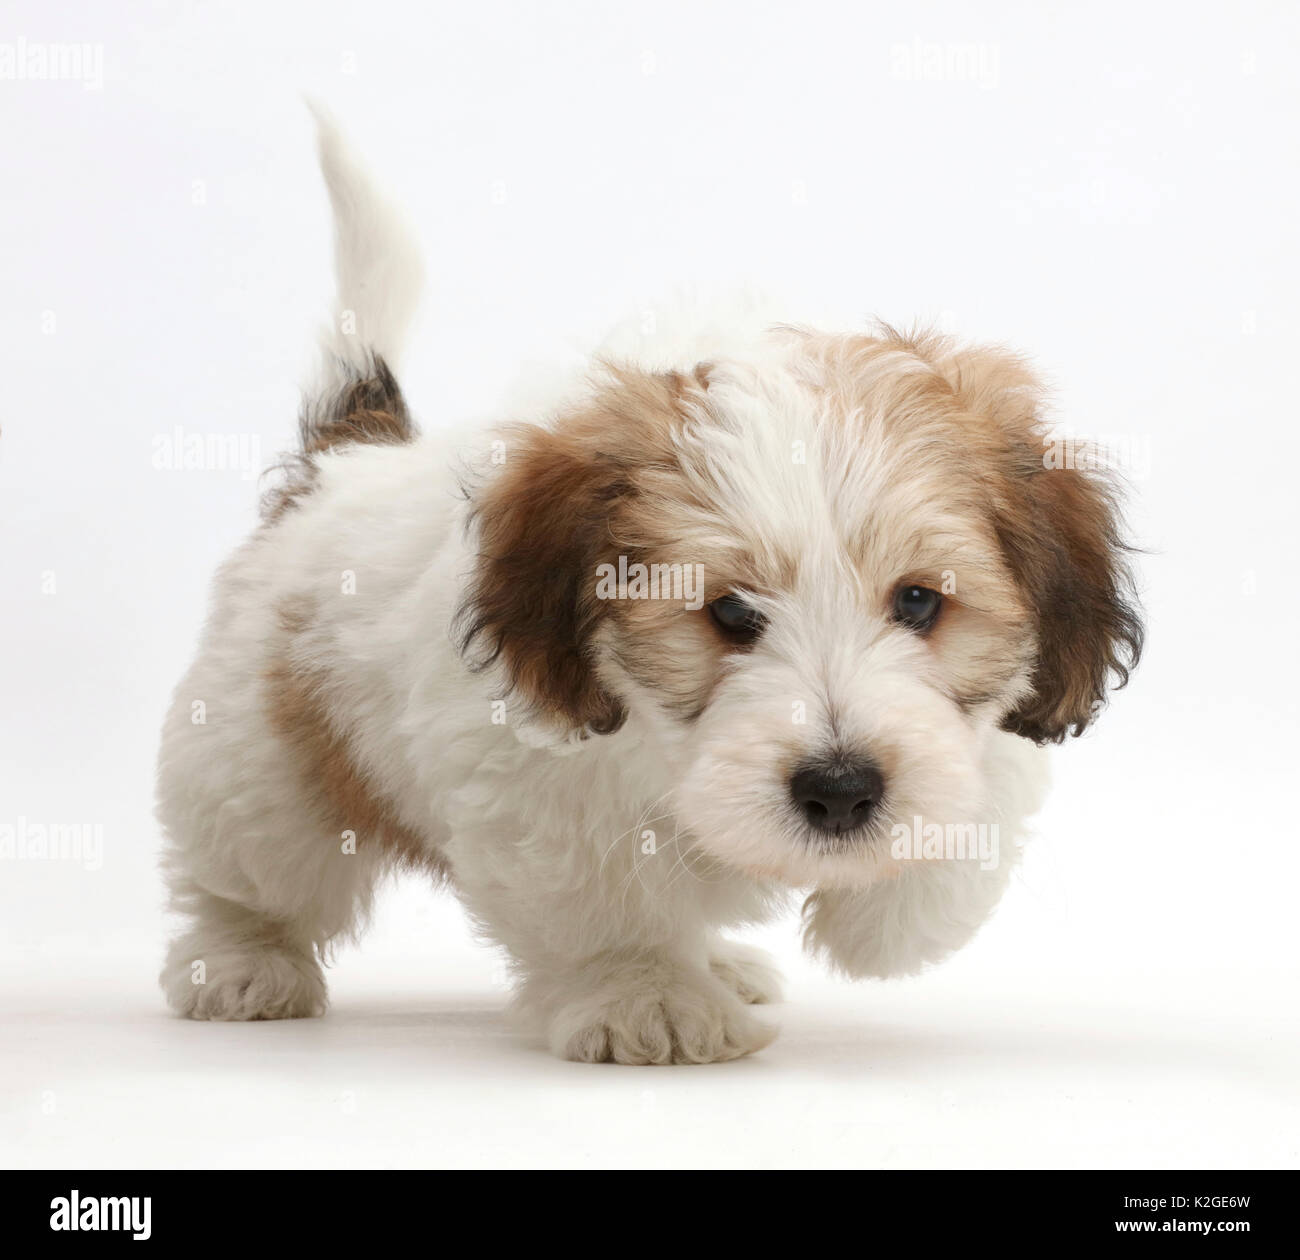 Jack Russell x Bichon puppy walking Stock Photo - Alamy